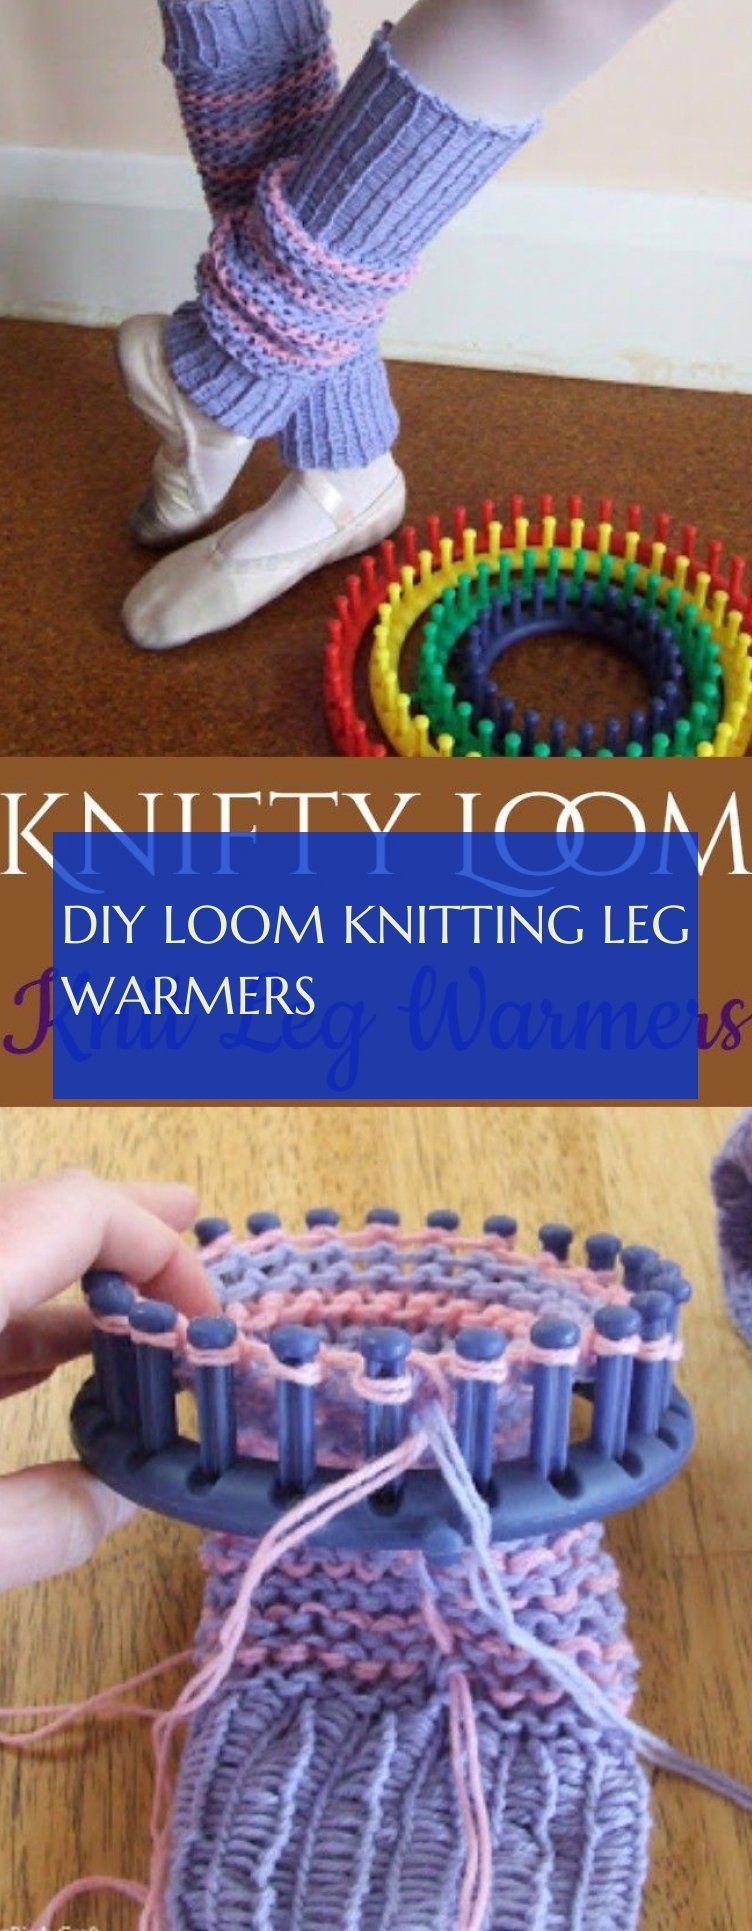 diy-loom-knitting-leg-warmers-diy-webstuhl-stricken-beinlinge.jpg